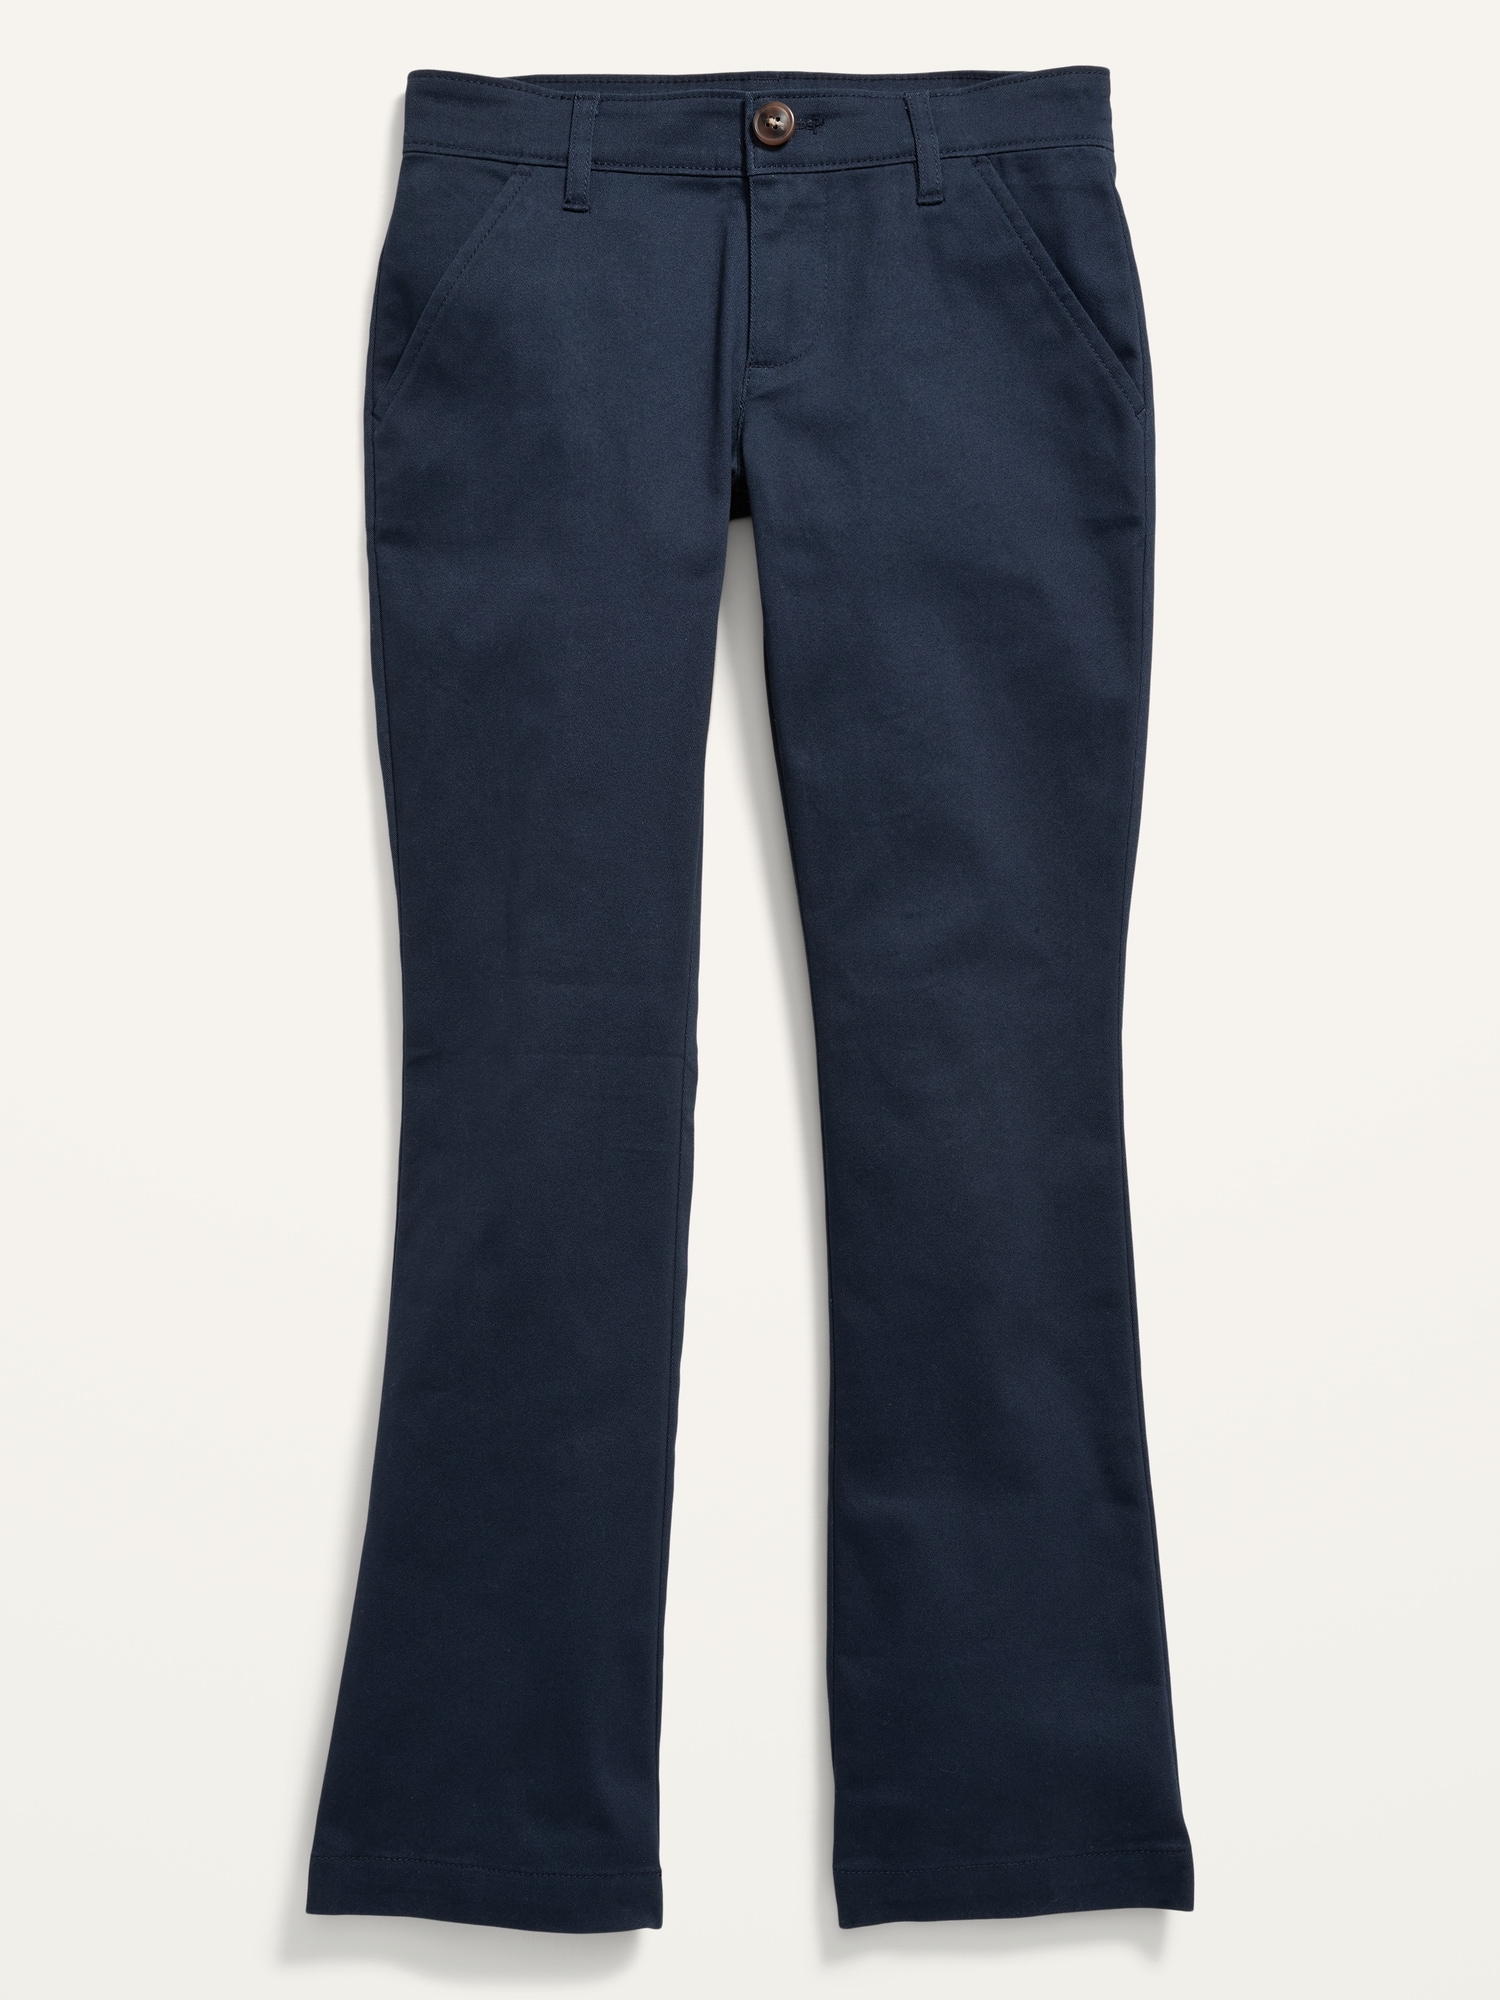 School Uniform Bootcut Pants for Girls | Old Navy